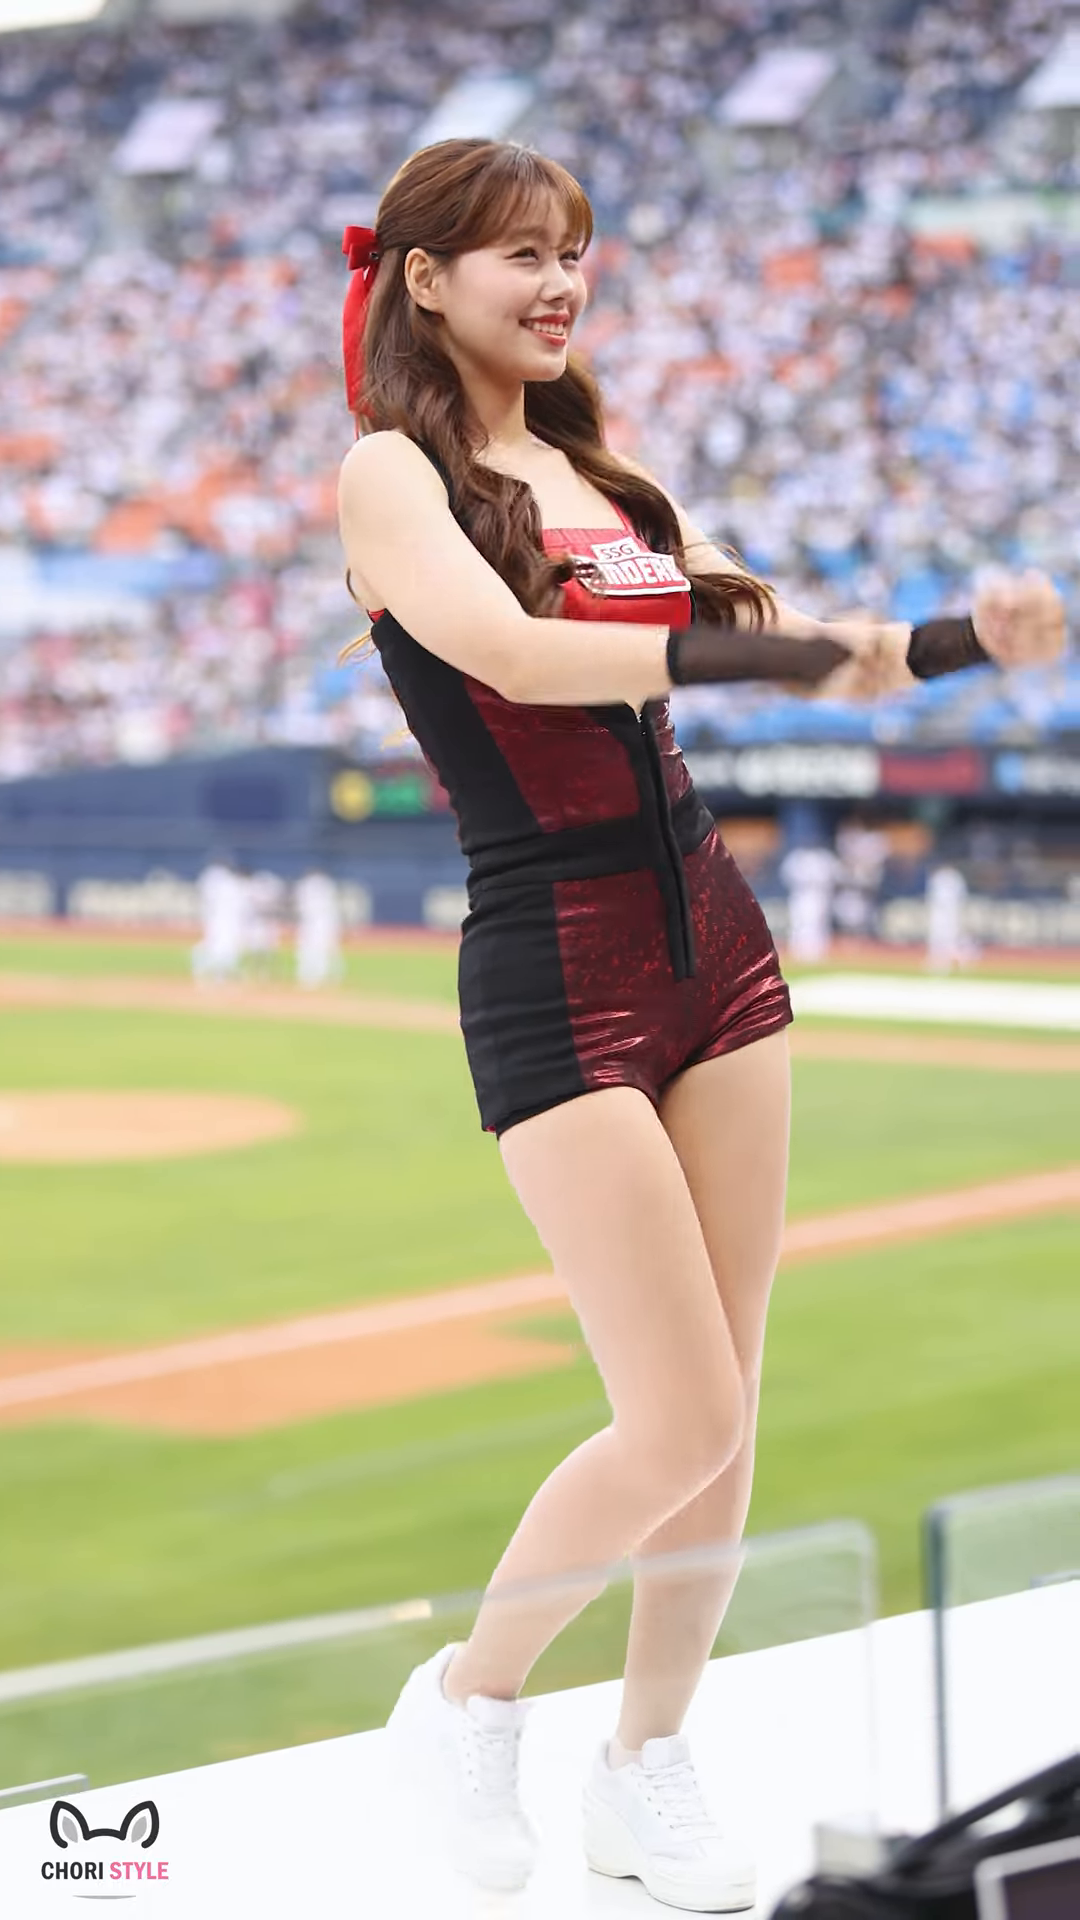 Kim Doa,Korean cherrleader,beautiful skin, butt 6